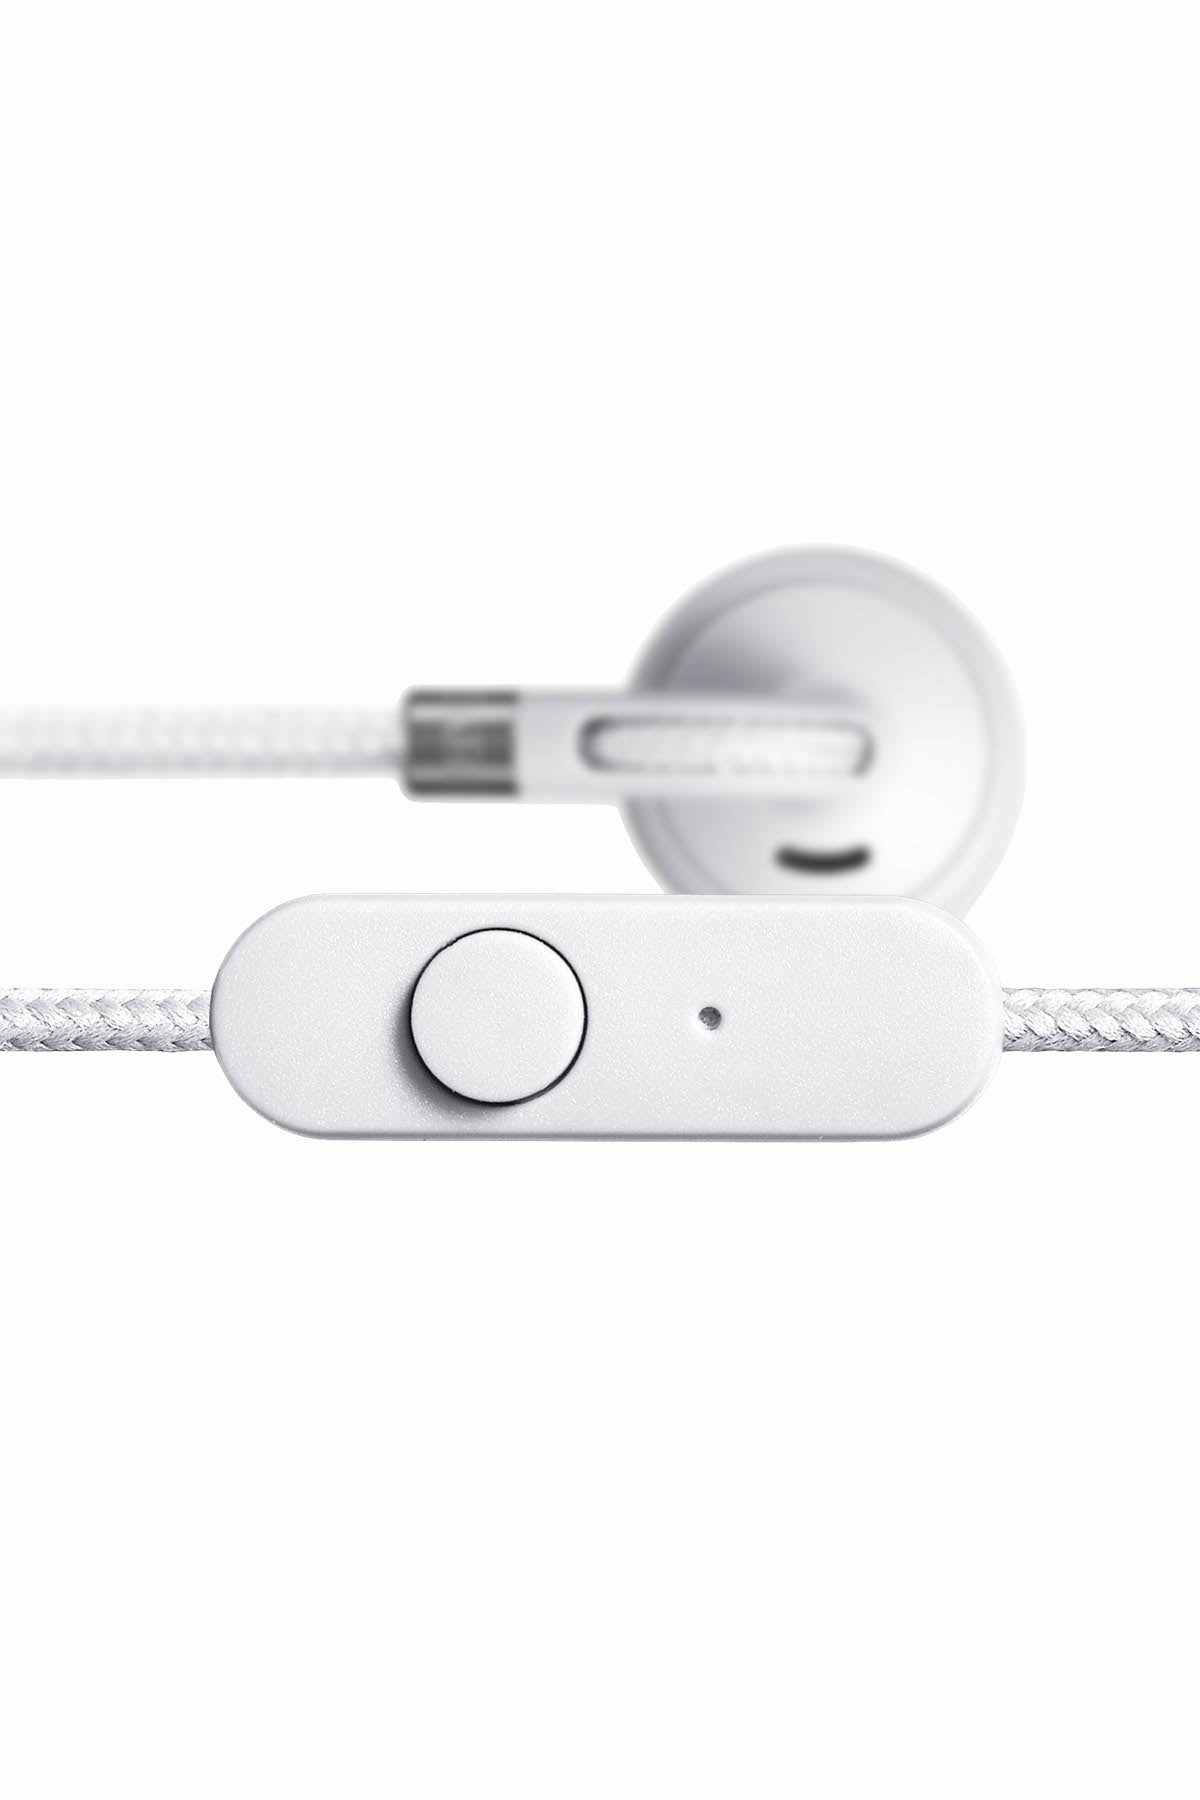 UrbanEars White Sumpan Earbuds w/ Microphone & Remote